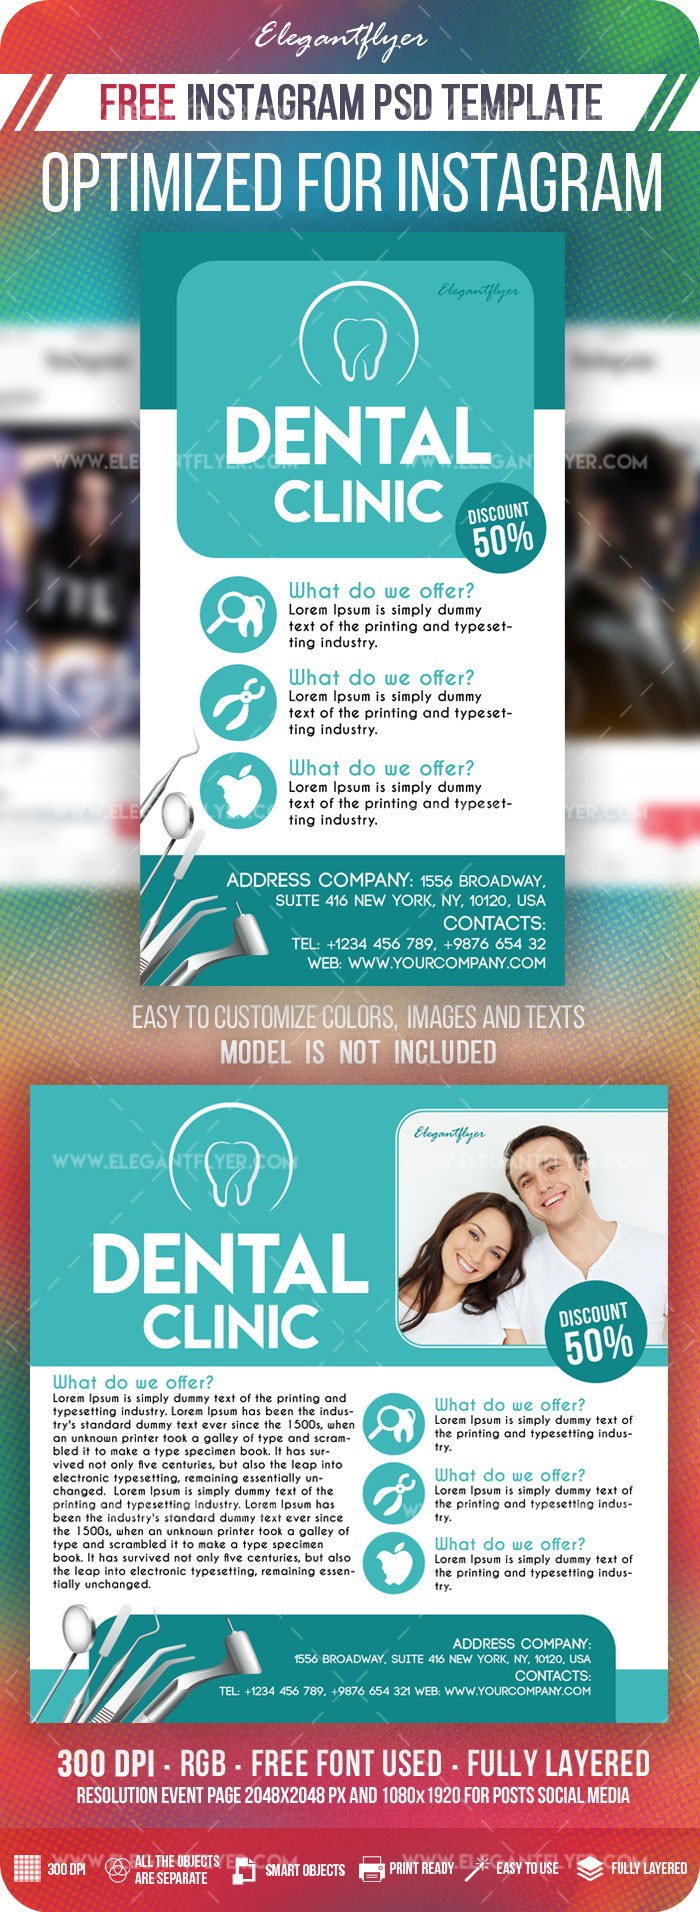 Dental Clinic Instagram by ElegantFlyer